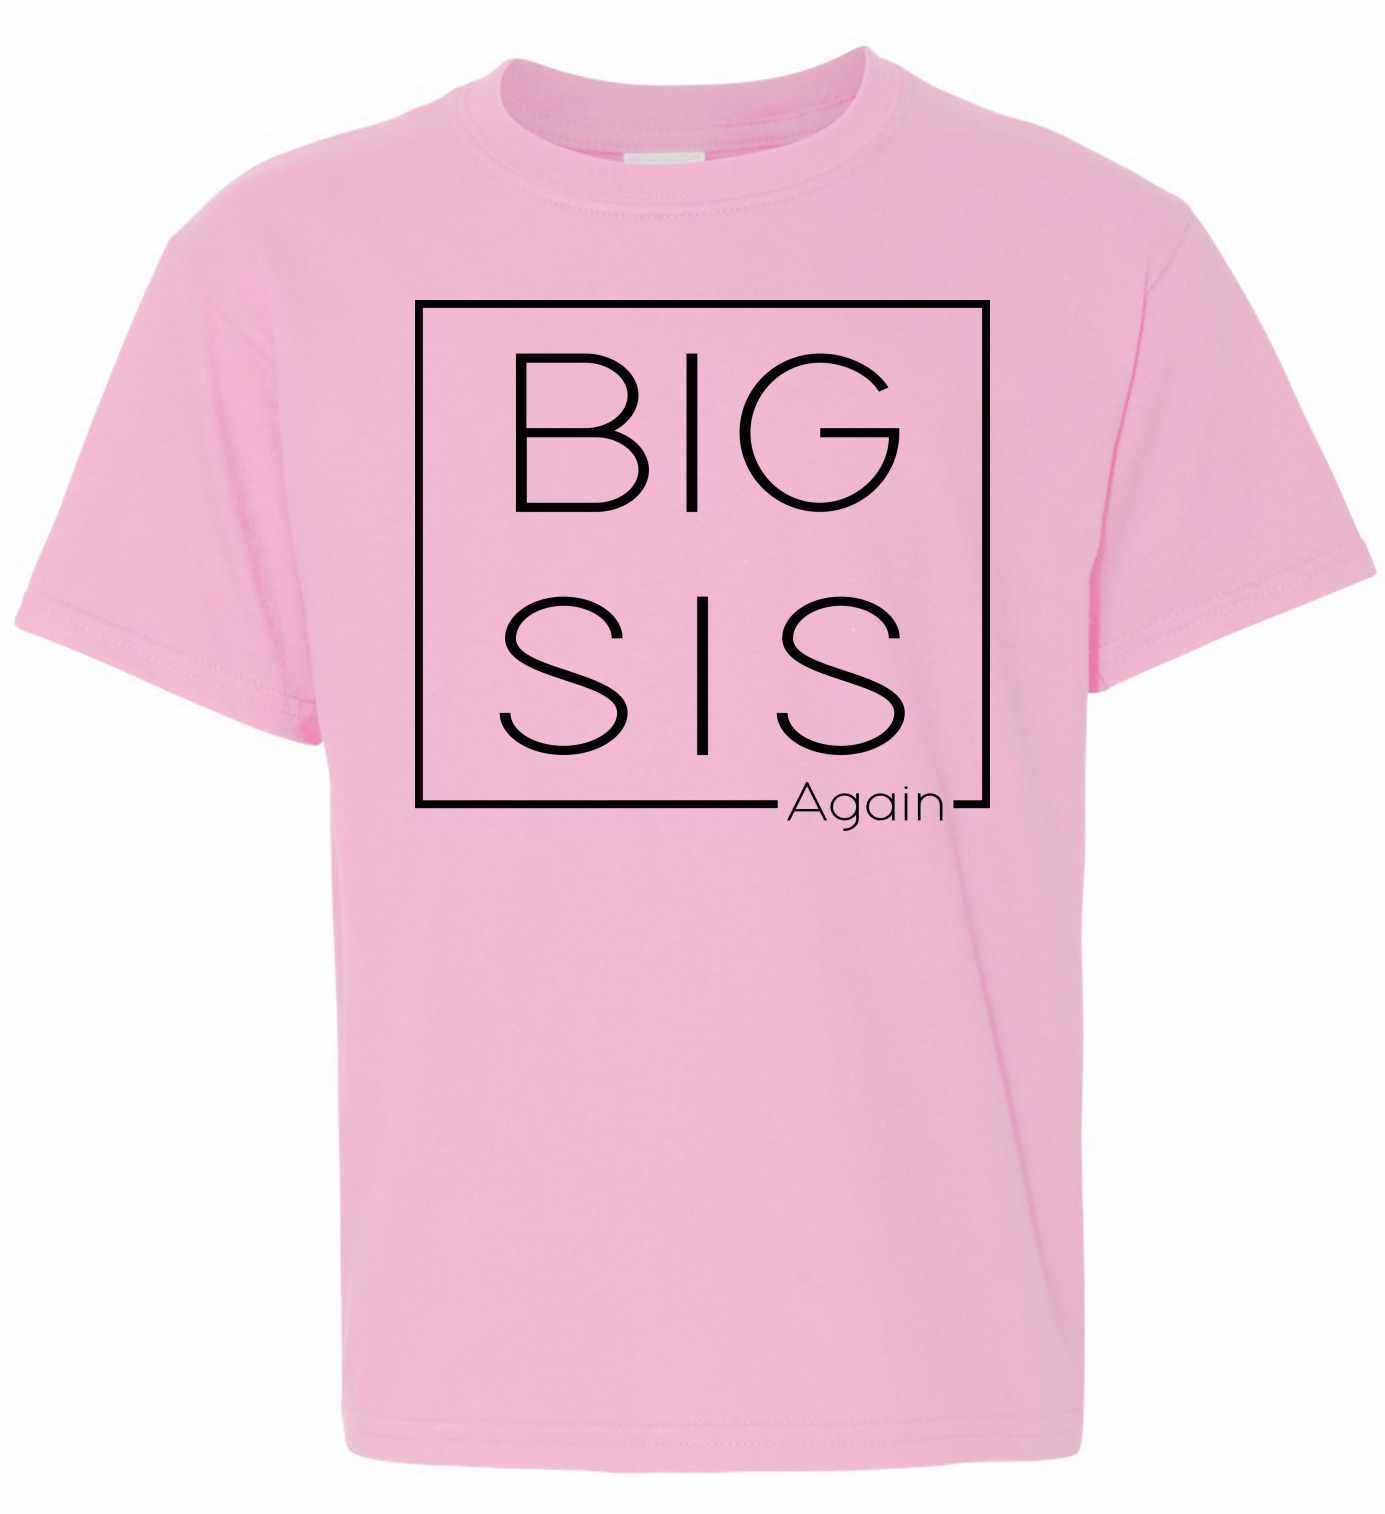 Big Sis Again - Big Sister Boxed on Kids T-Shirt (#1312-201)